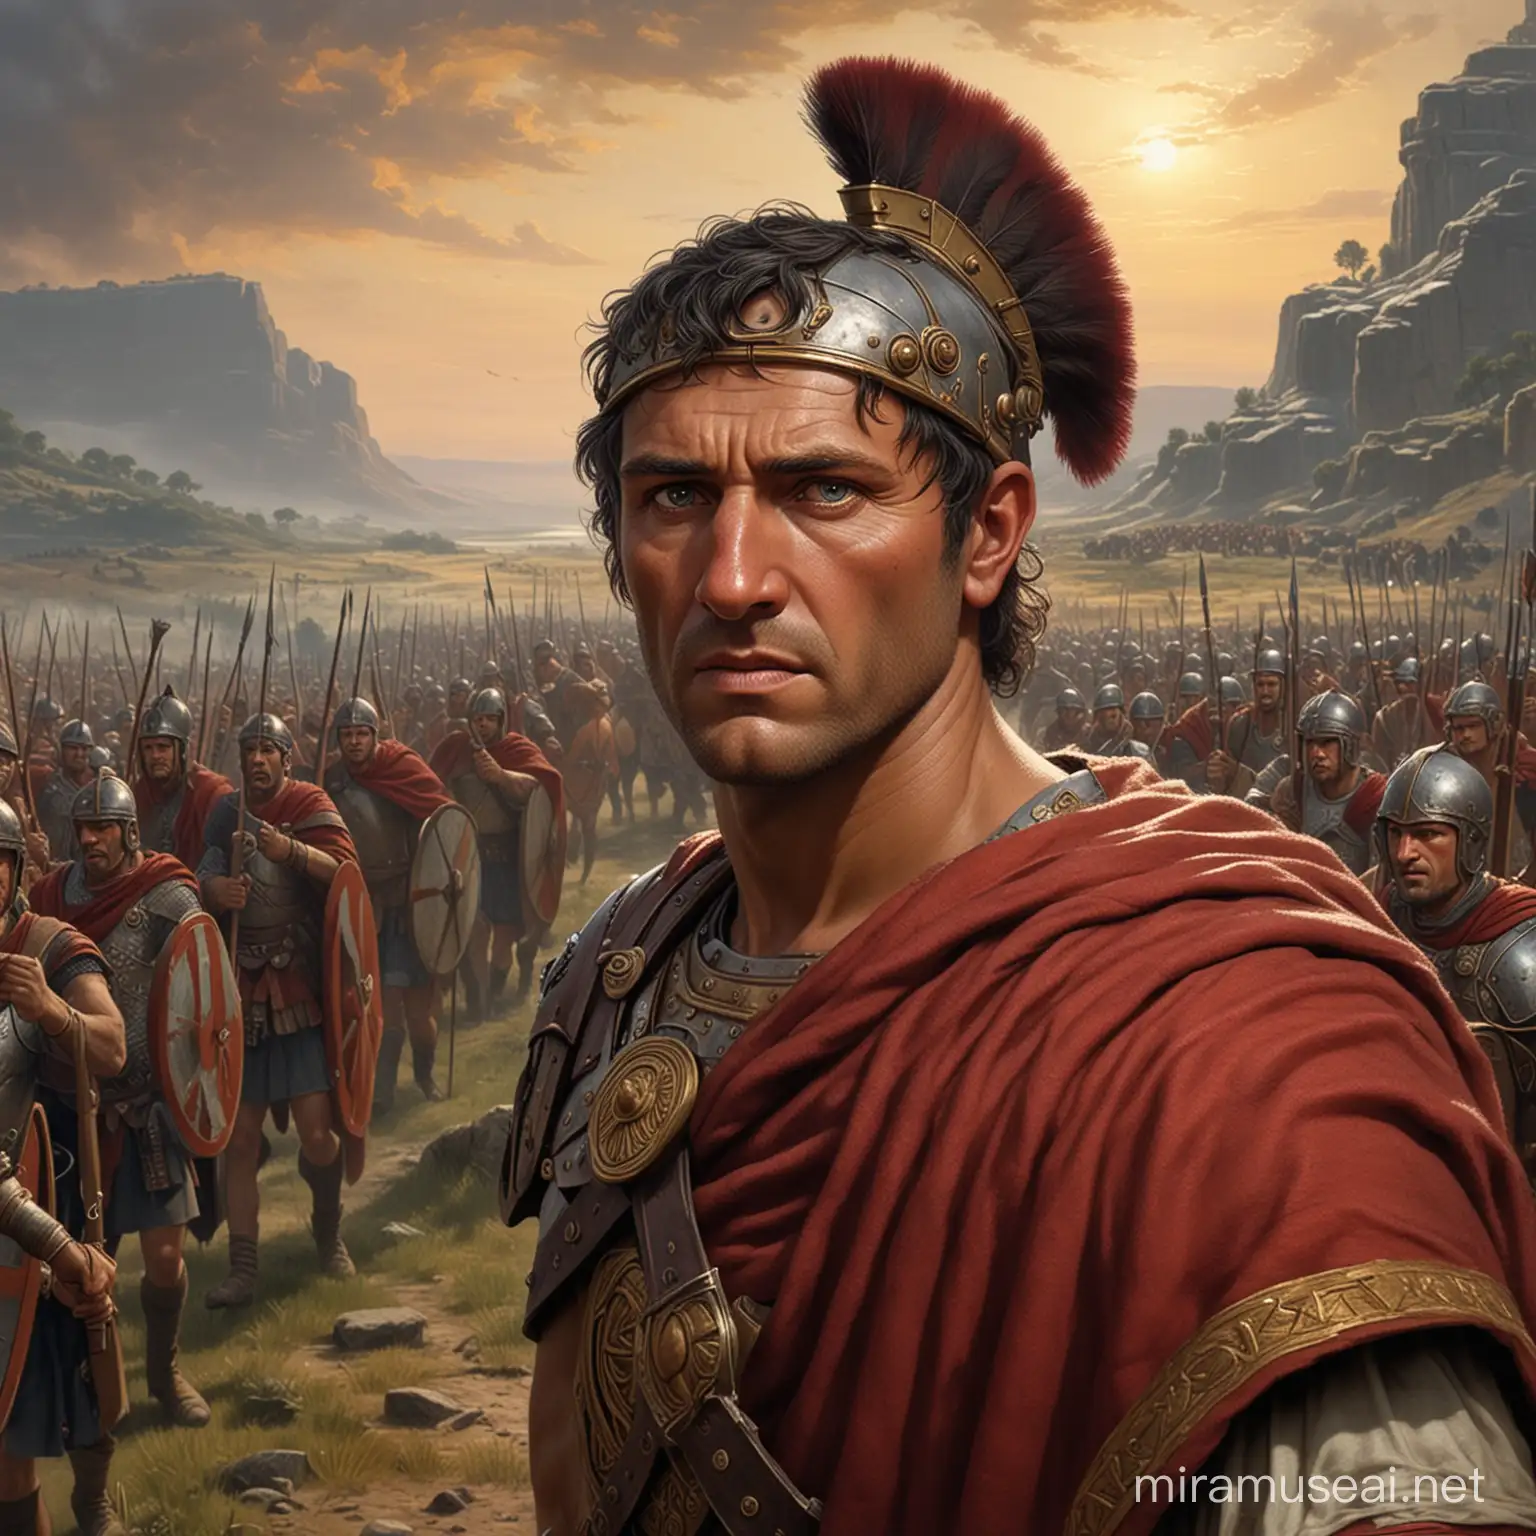 Caesars Conquest Brilliant Strategist Leading Troops through Rugged Gaul Terrain